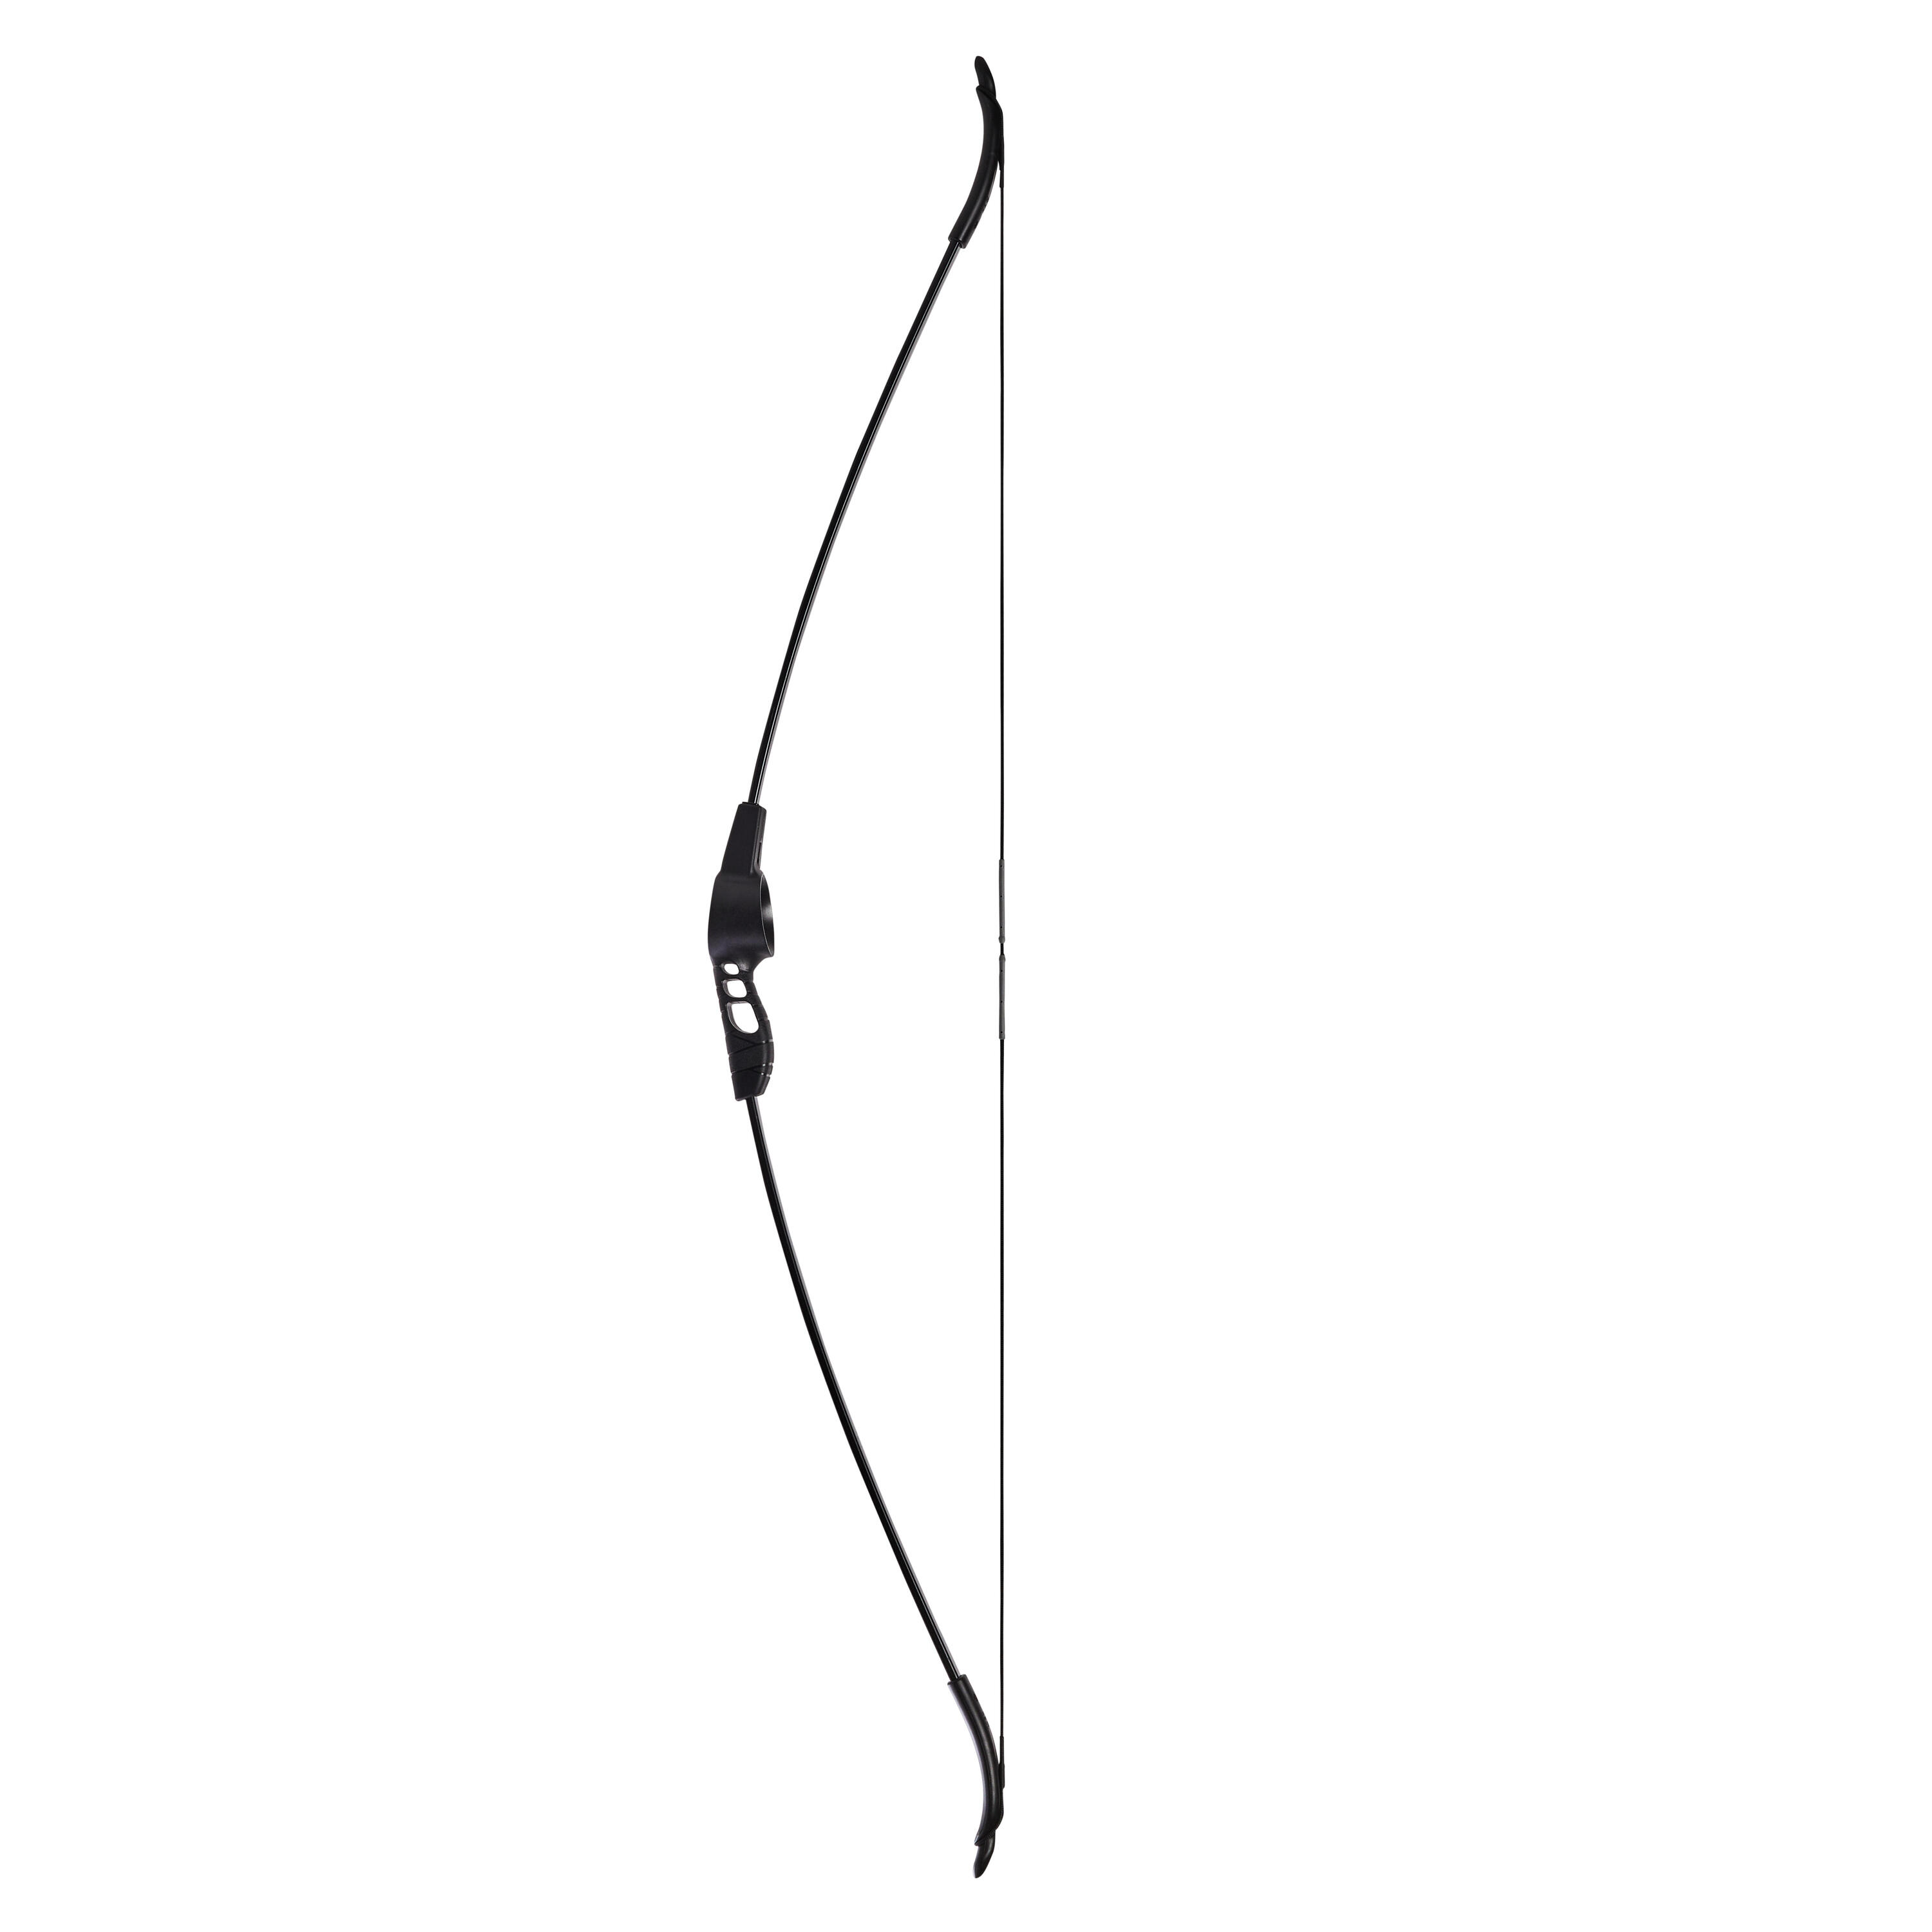 Discovery 100 Archery Bow - Black 7/19